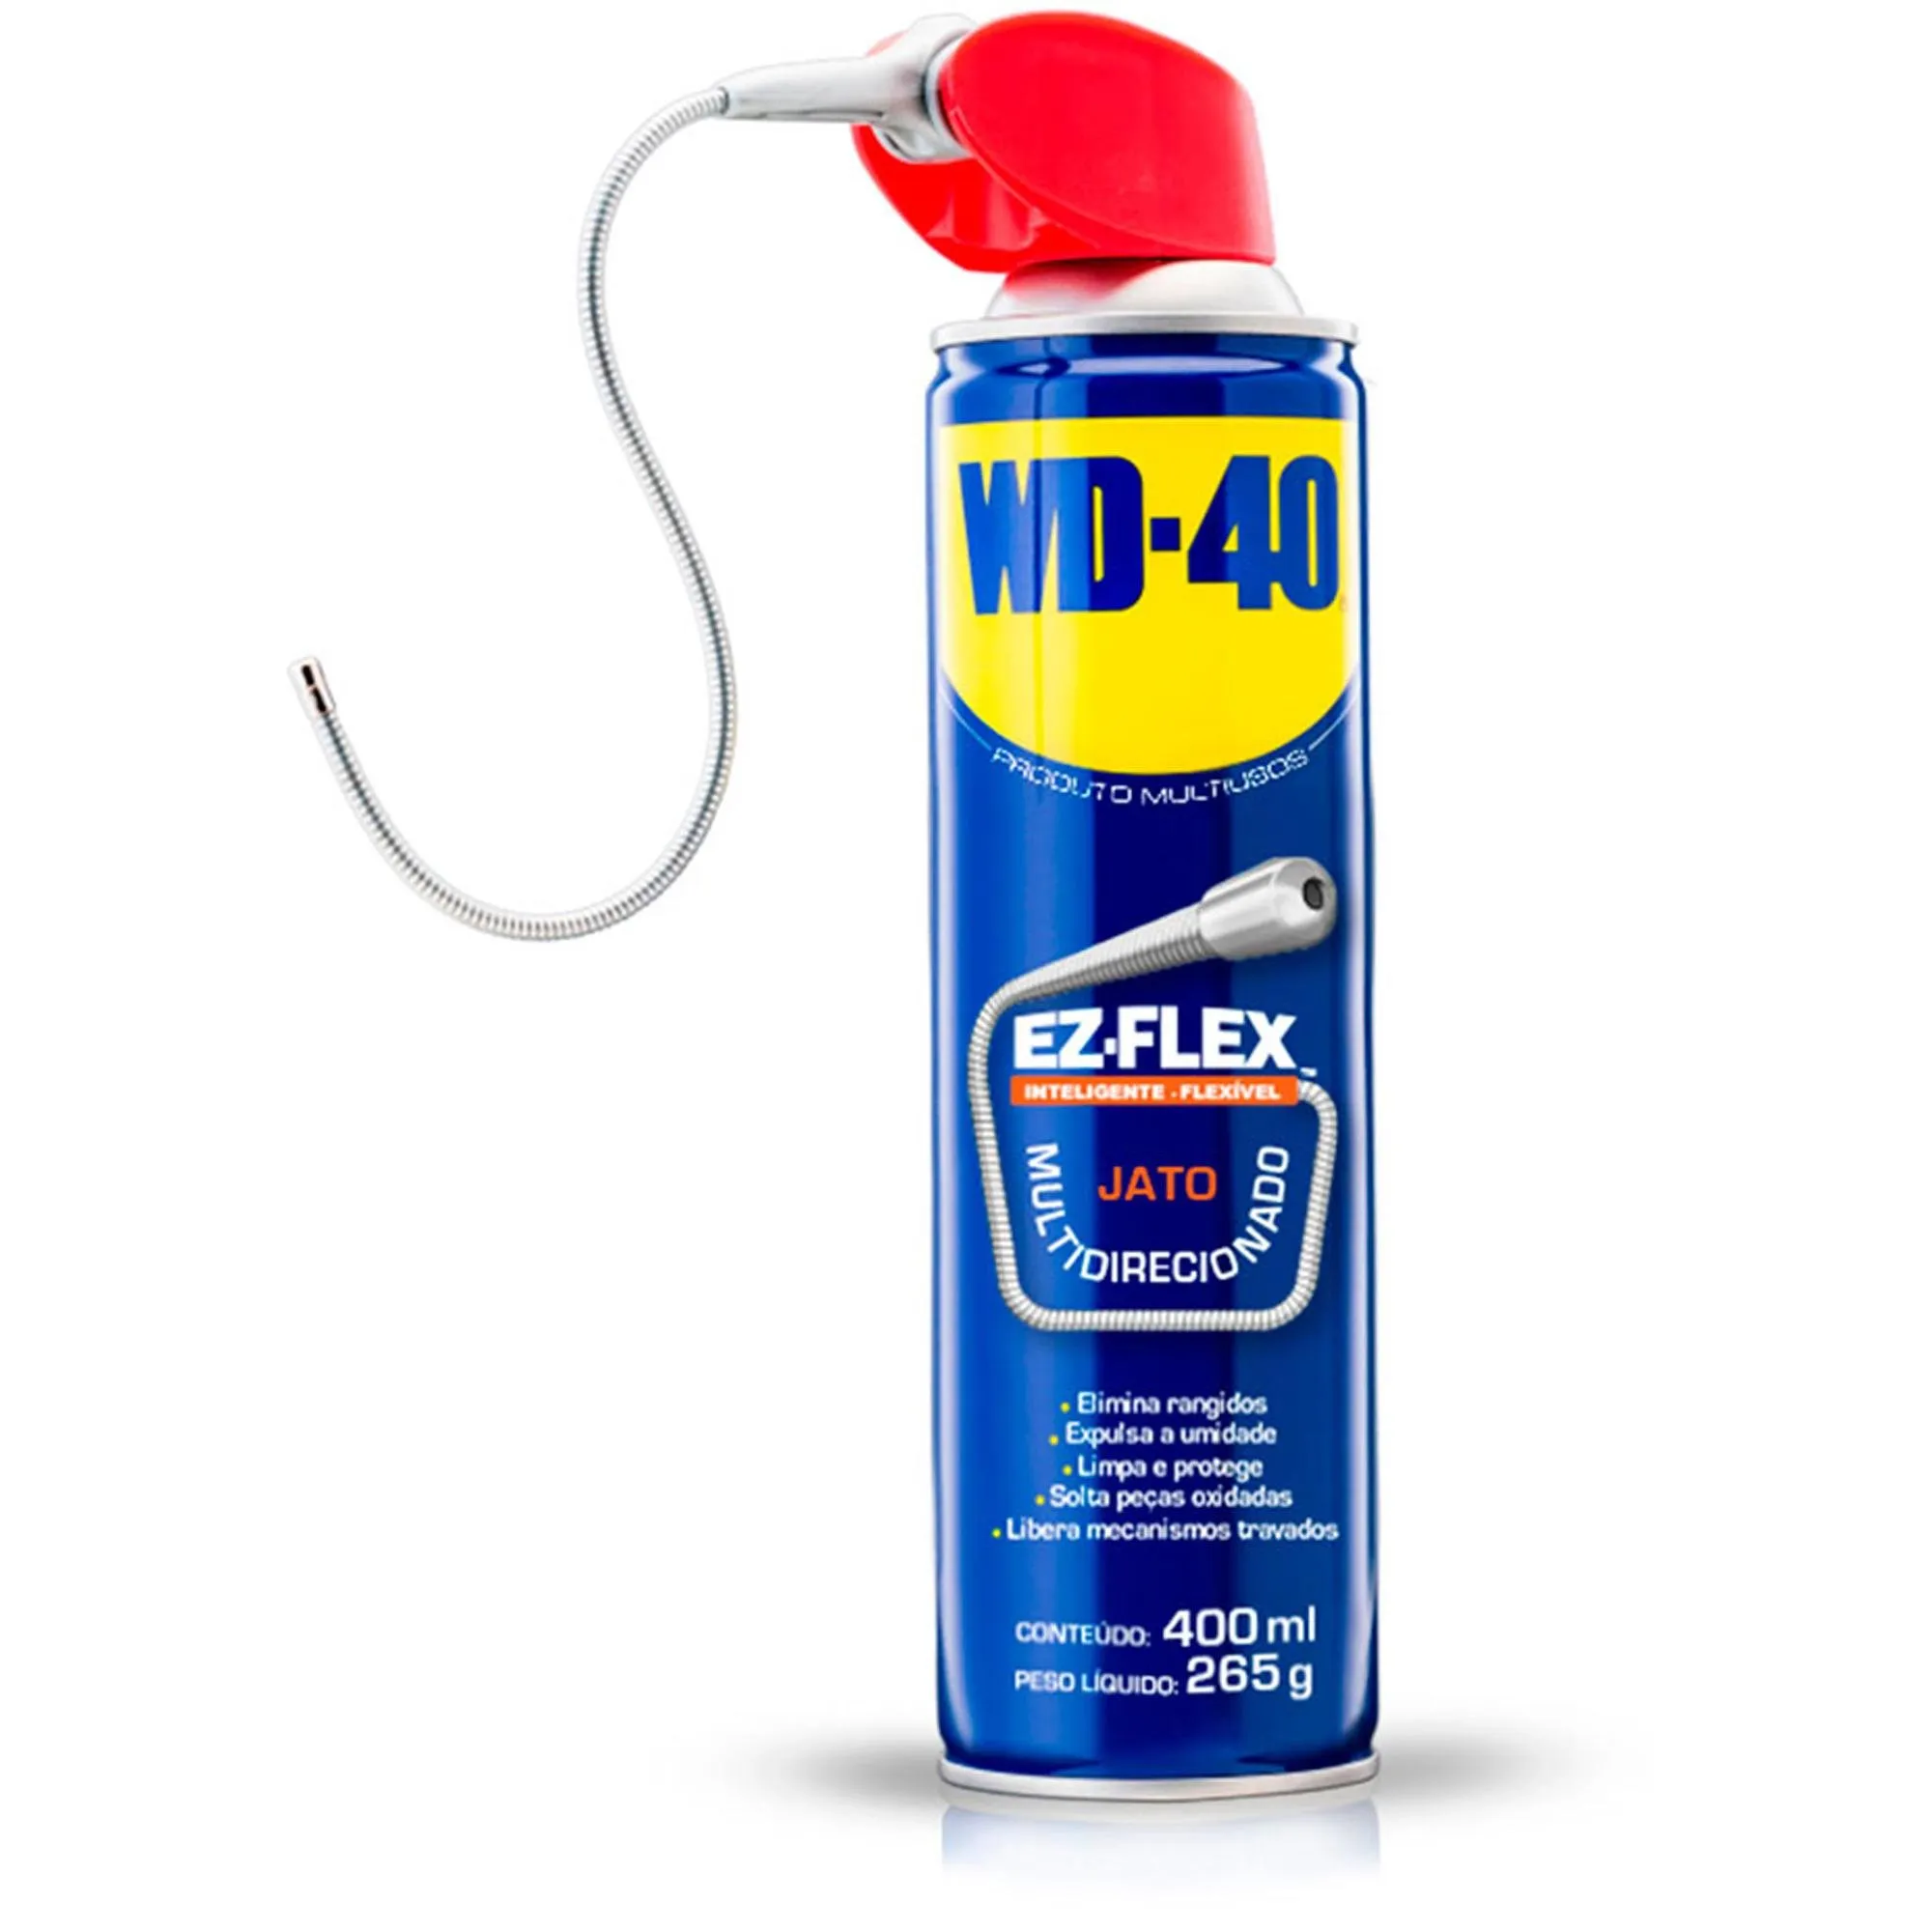 Spray 400ml WD40 Ez-flex - Caixa Fechada (80799)